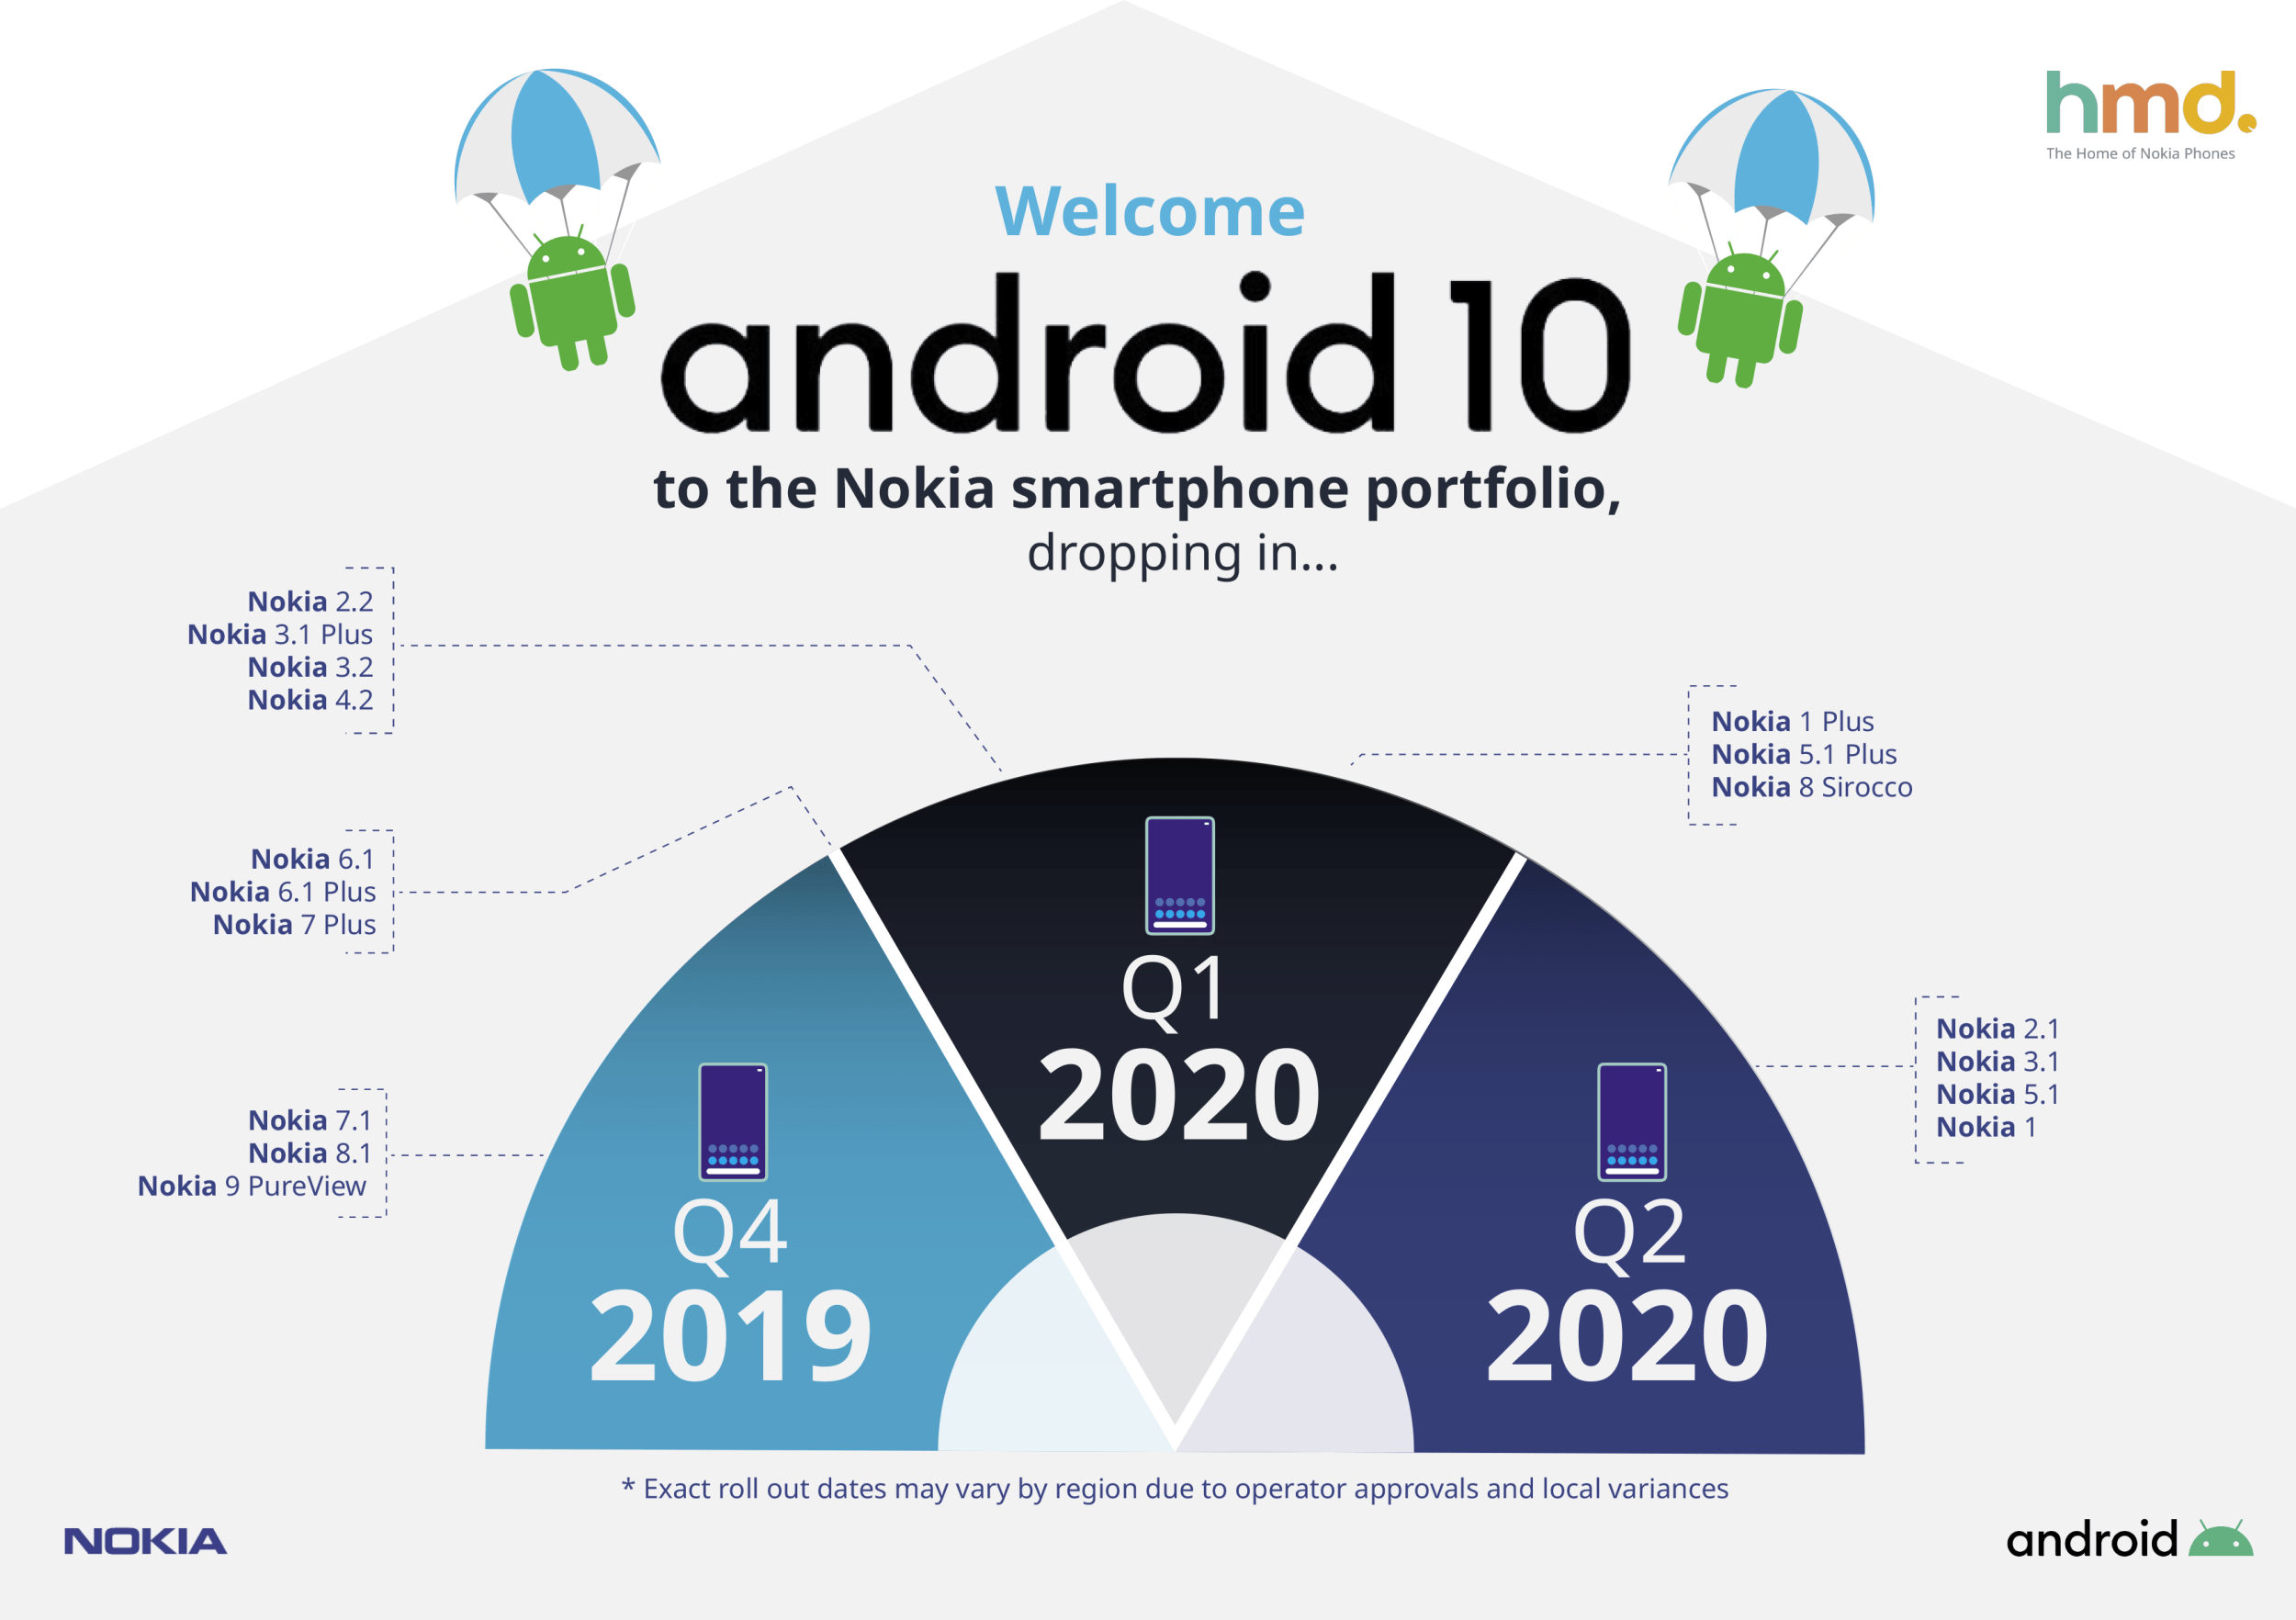 Android 10 upgrade schedule for Nokia smartphones